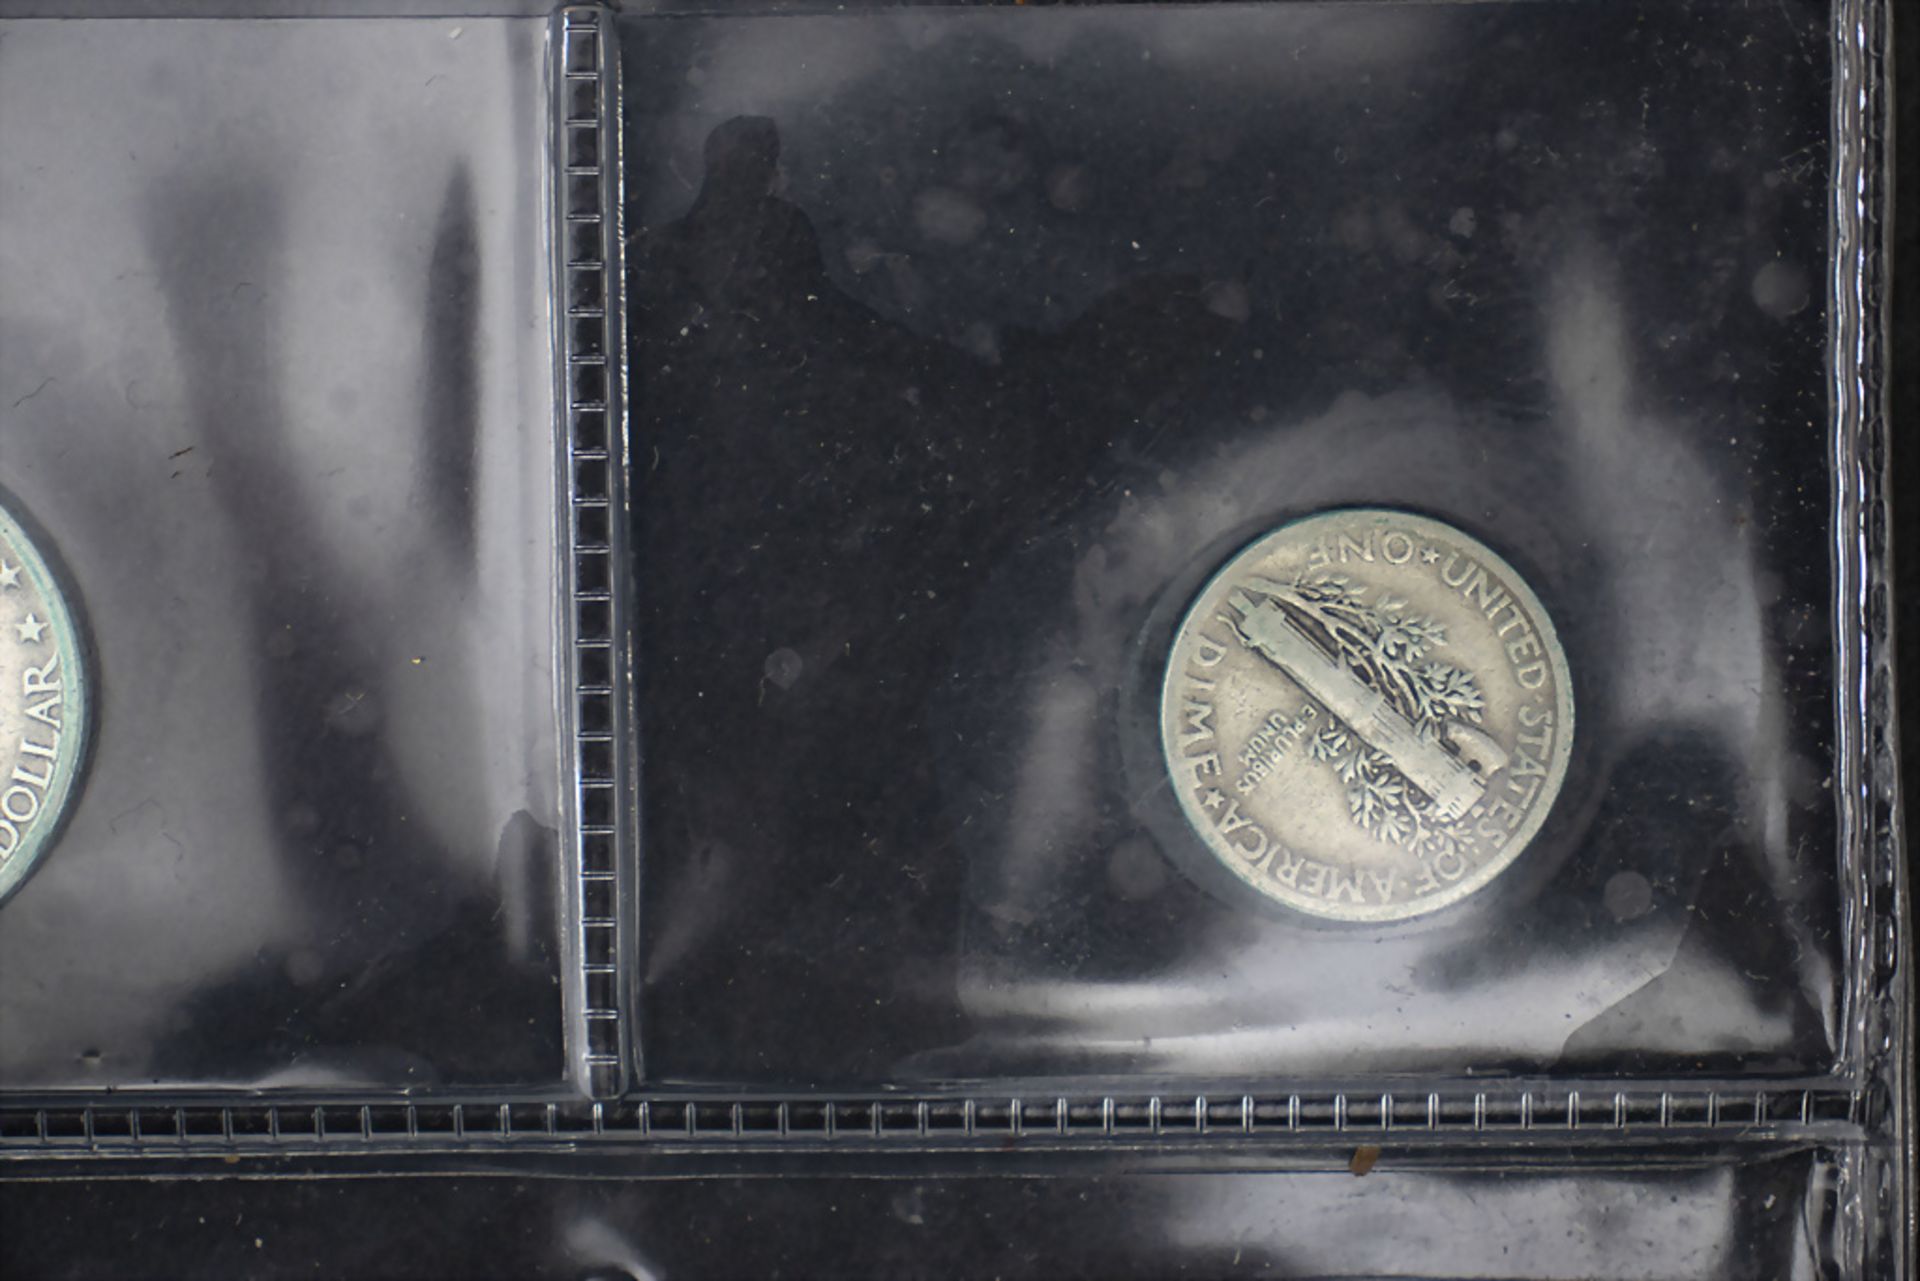 Sammlung Münzen 'USA' / A collection of US coins - Image 7 of 9